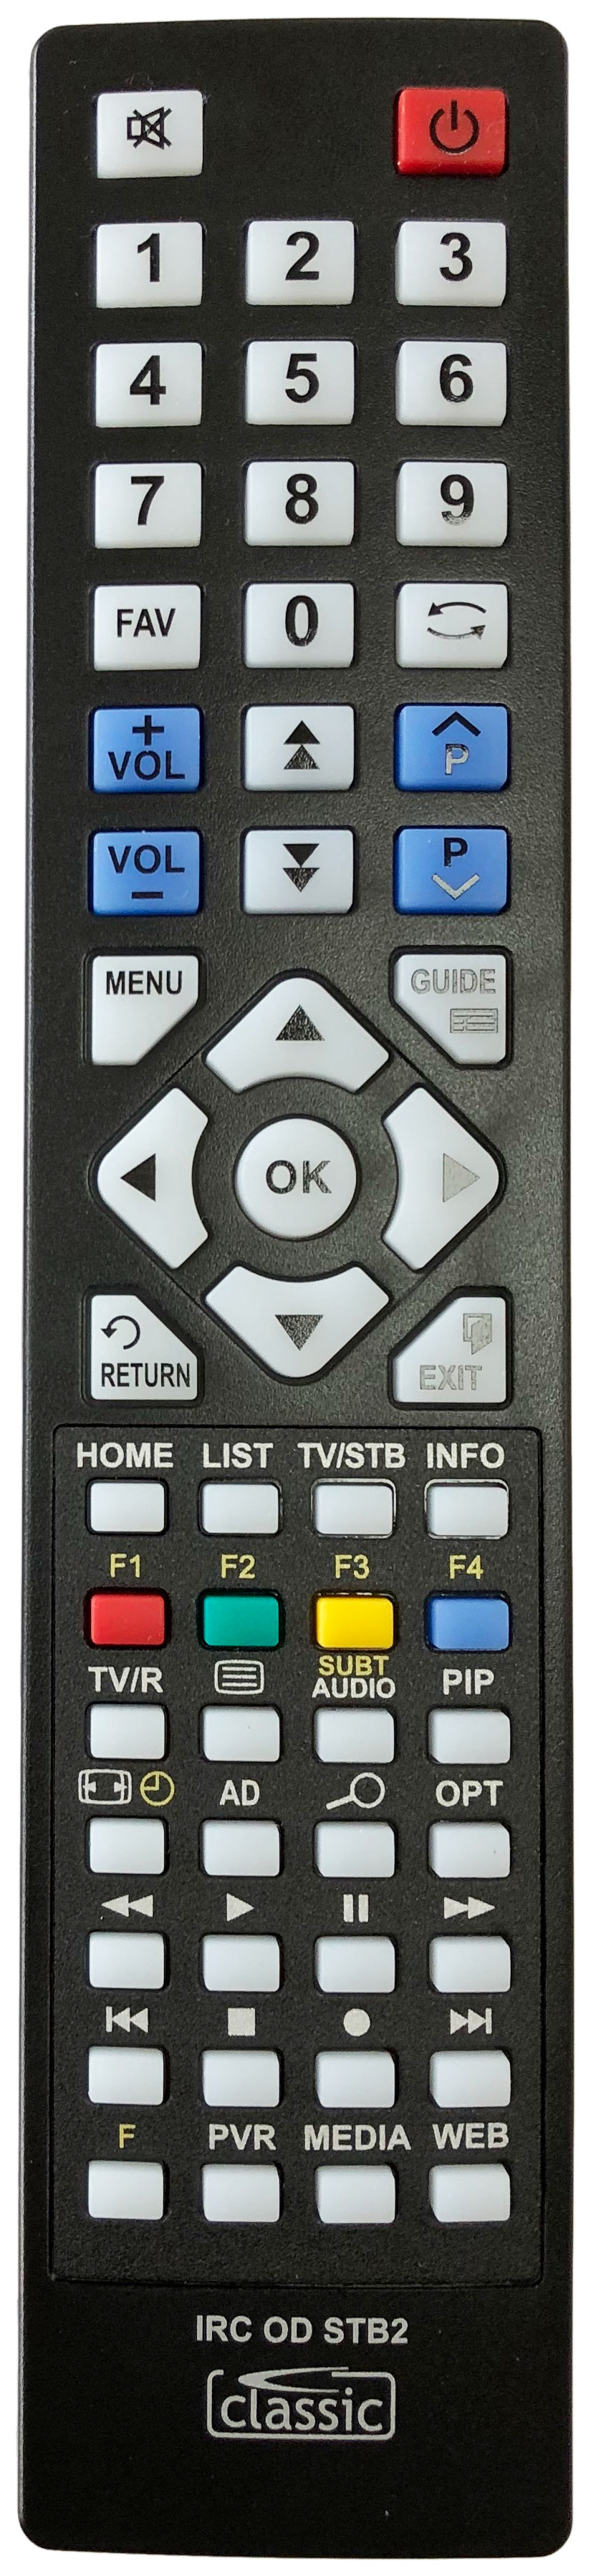 HUMAX RM-109U Remote Control Alternative